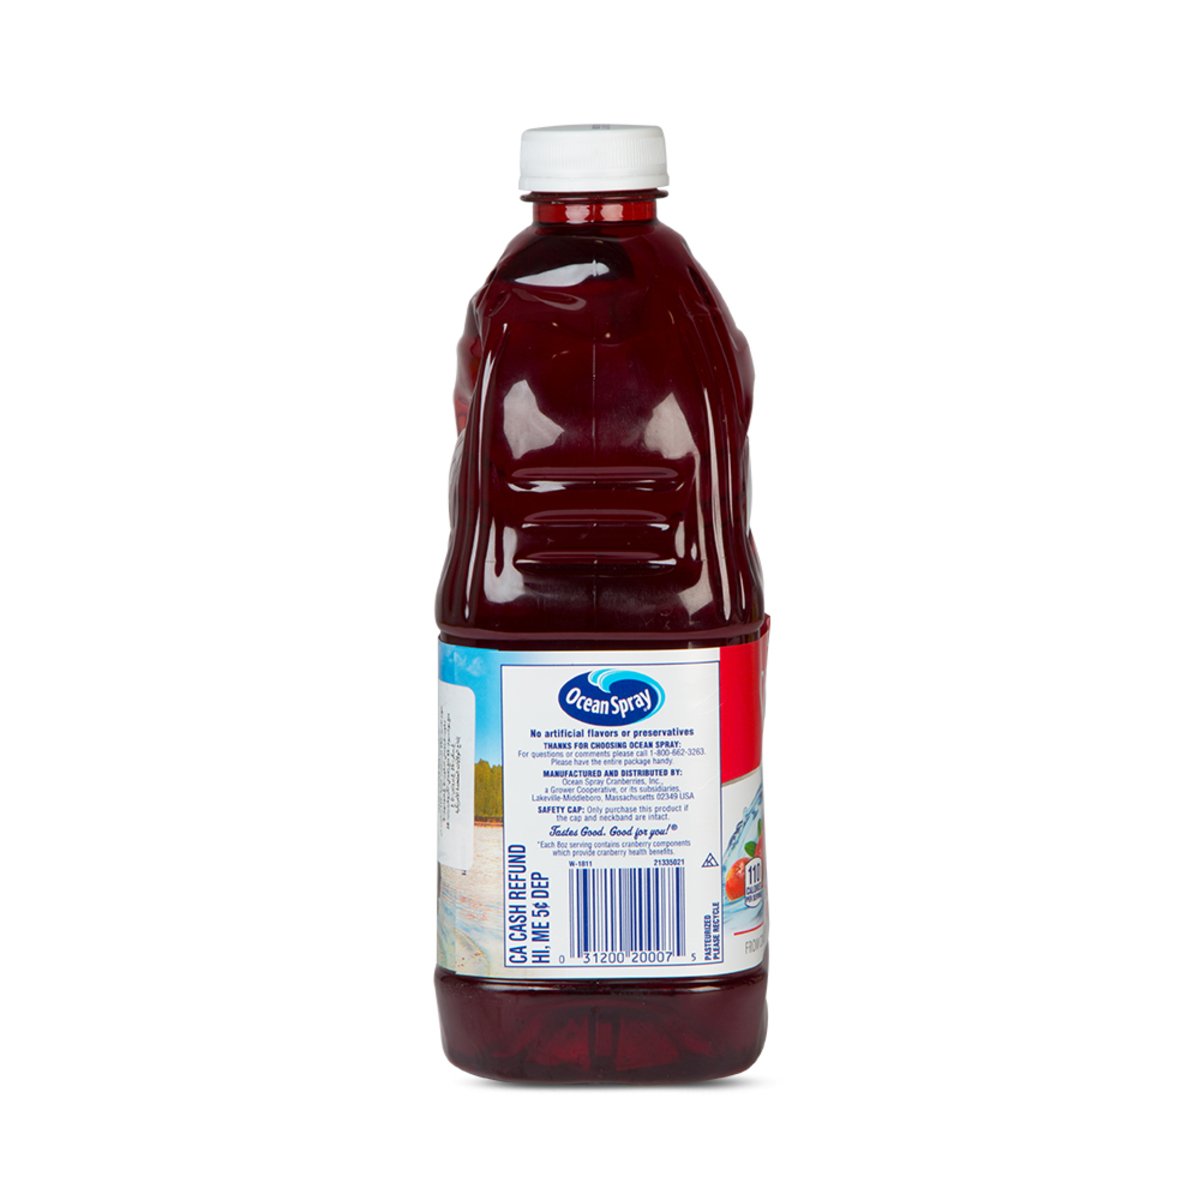 Ocean Spray Cranberry Cocktail Juice Drink 1.89 Litres